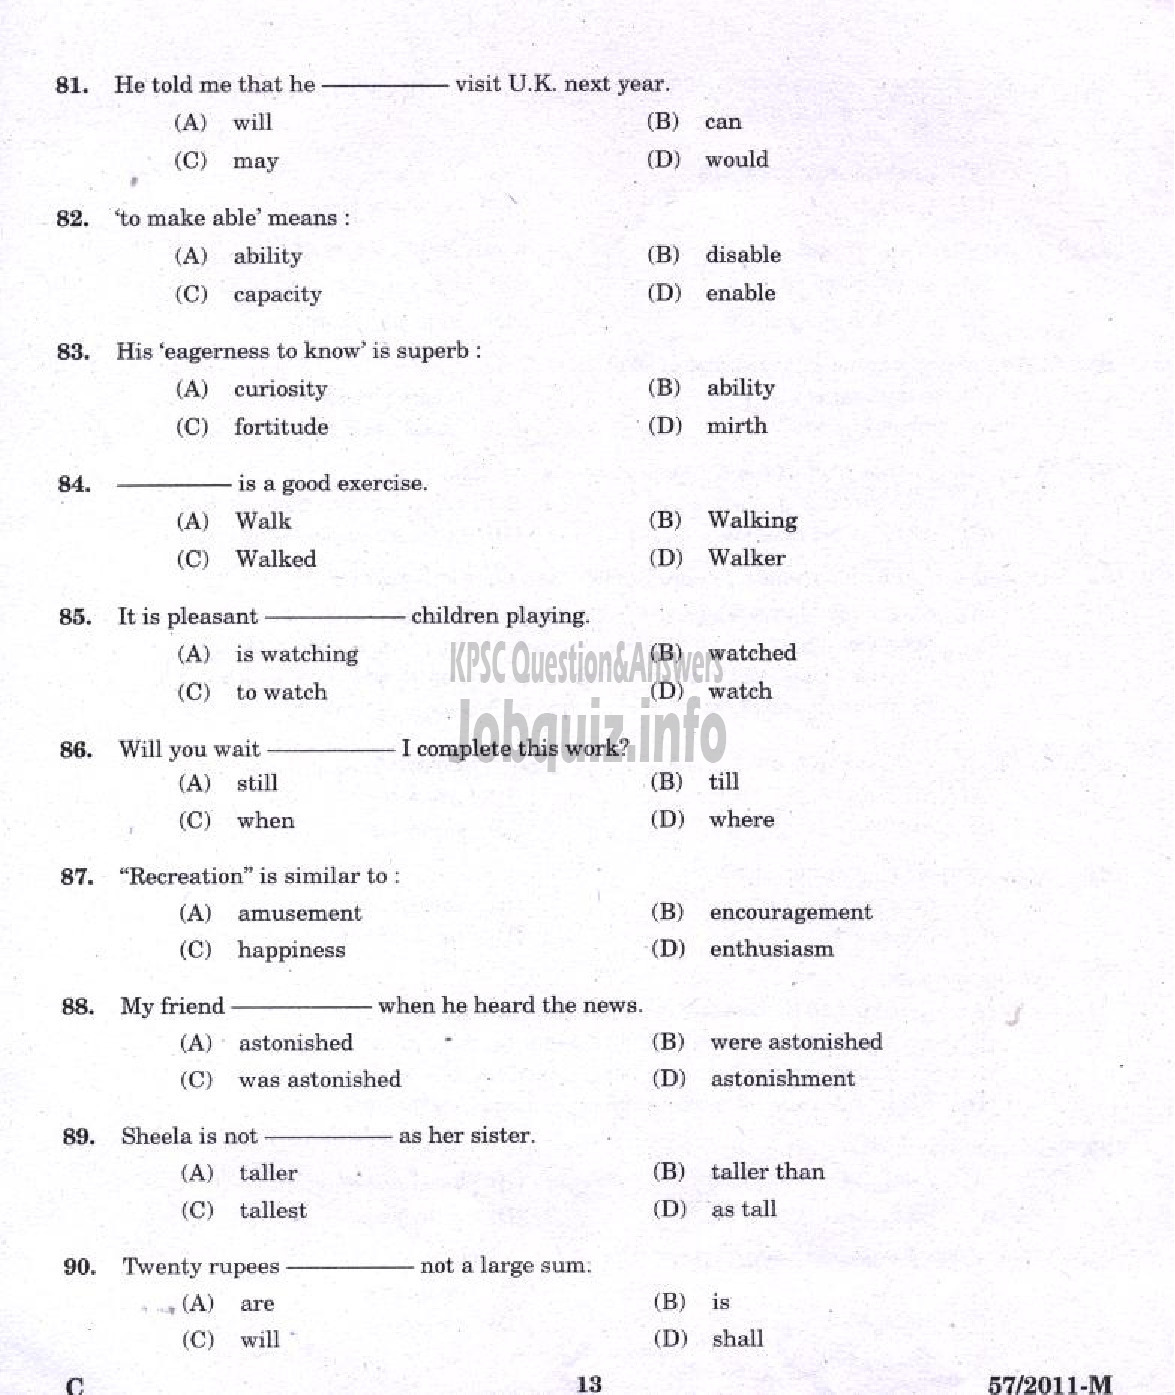 Kerala PSC Question Paper - LDC 2011 ERNAKULAM DISTRICT ( Malayalam ) -10